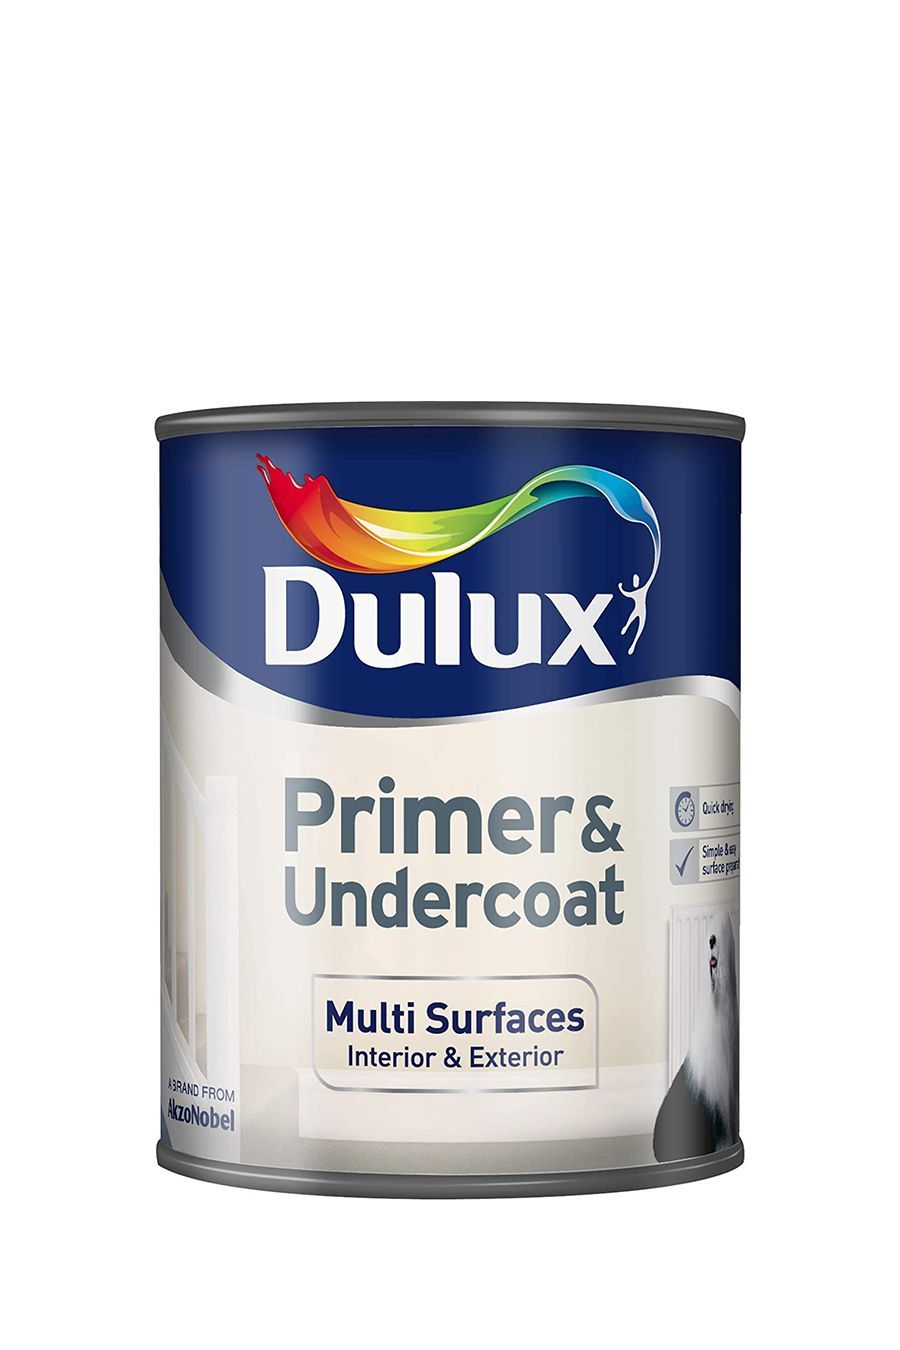 Dulux Primer & Undercoat for Multi Surfaces